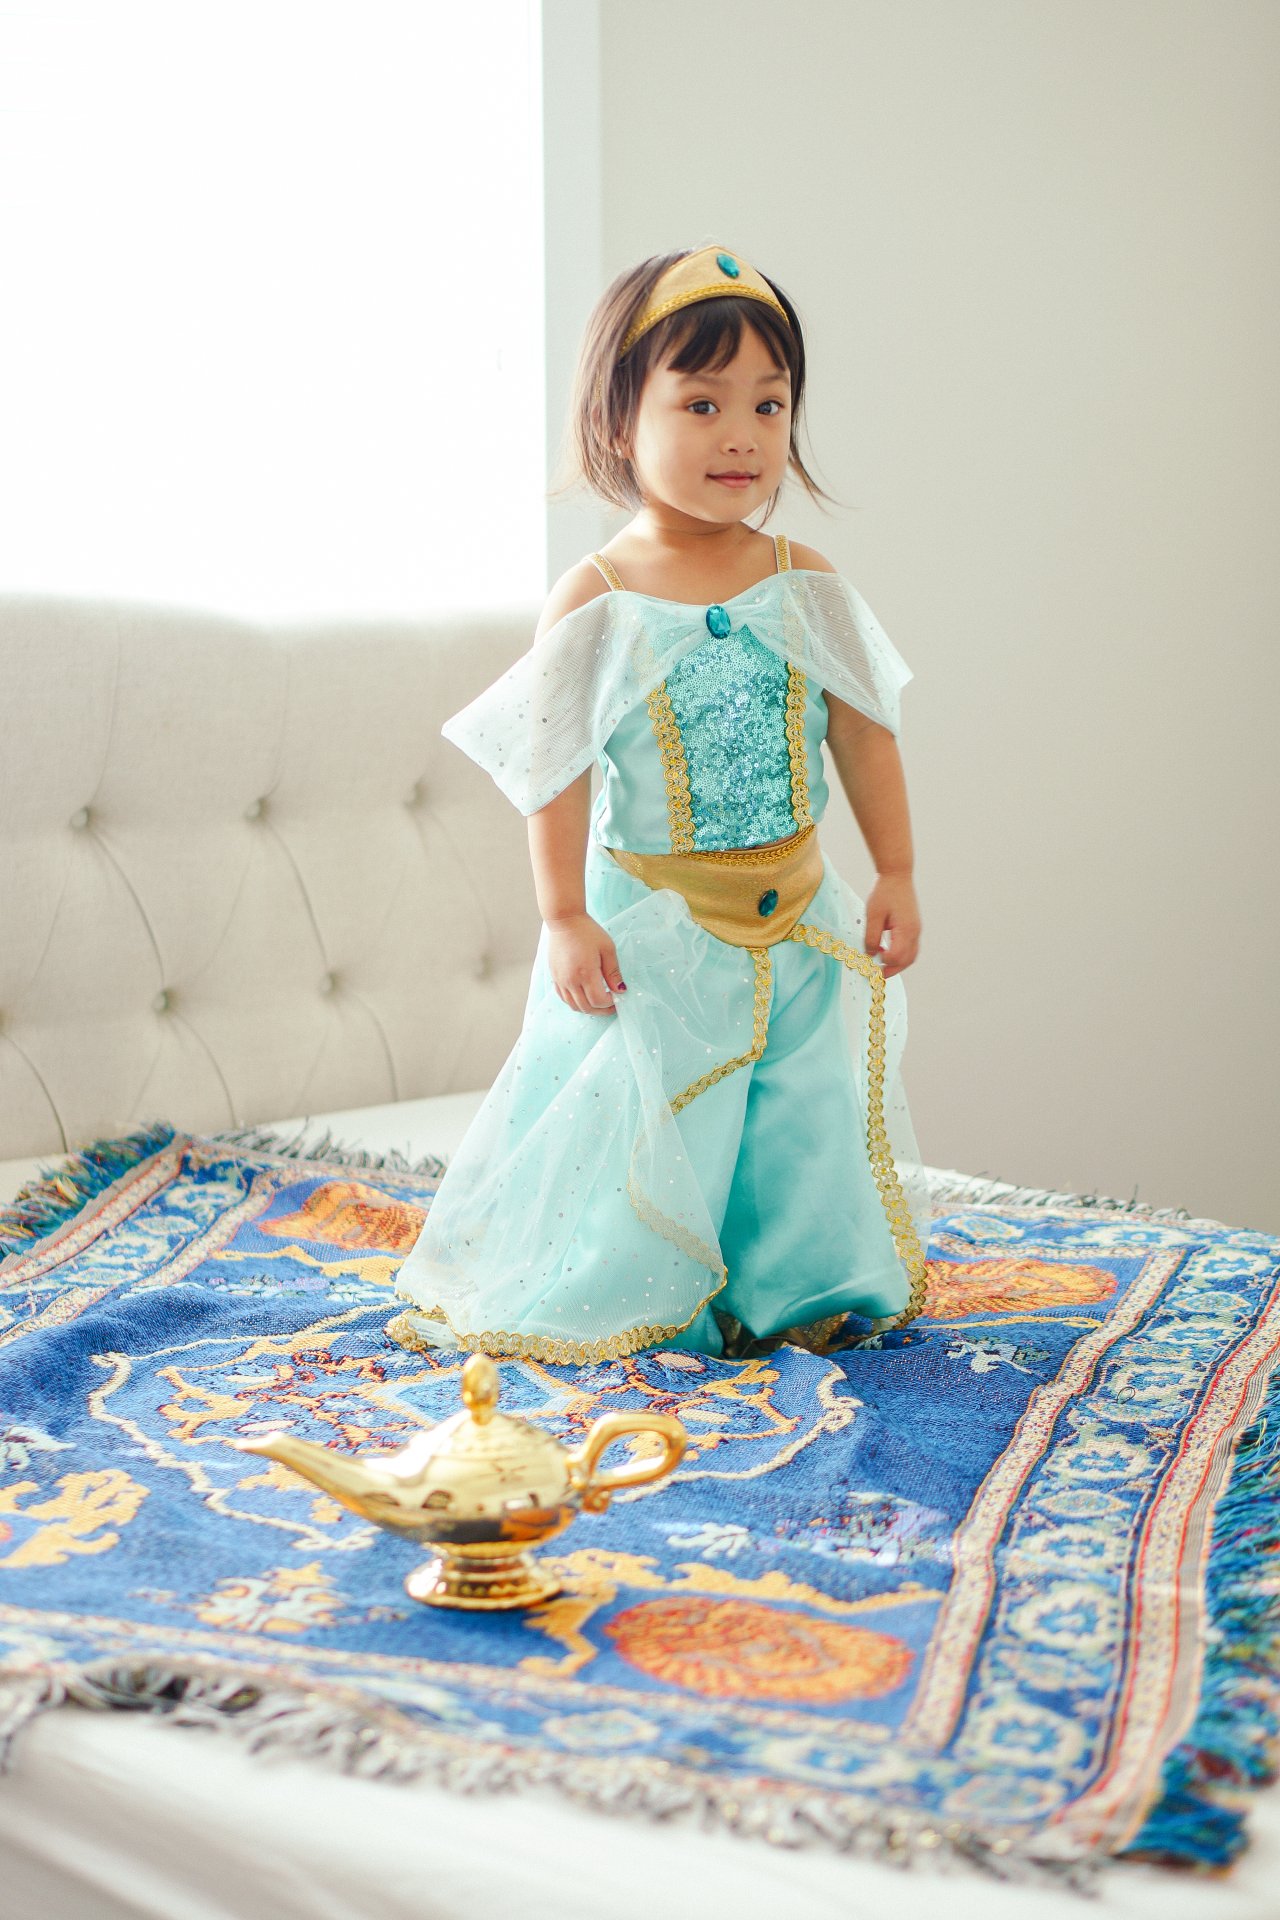 Enfant Jasmine Princesse Robe Cosplay Costume –